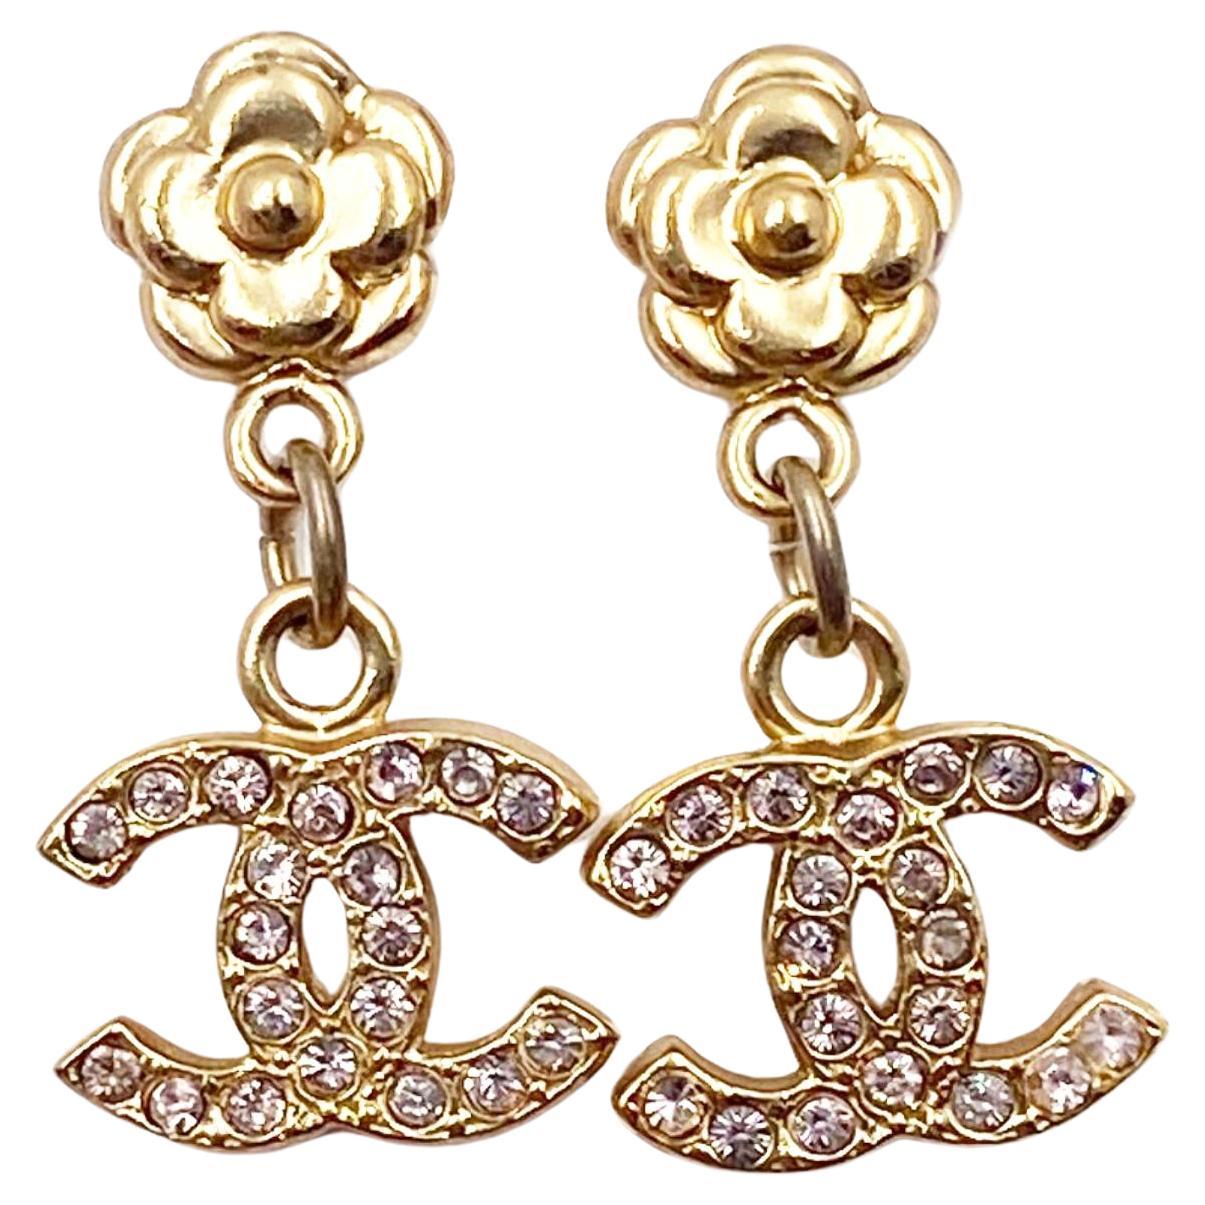 Shopbop Archive Chanel Crystal Drop CC Earrings